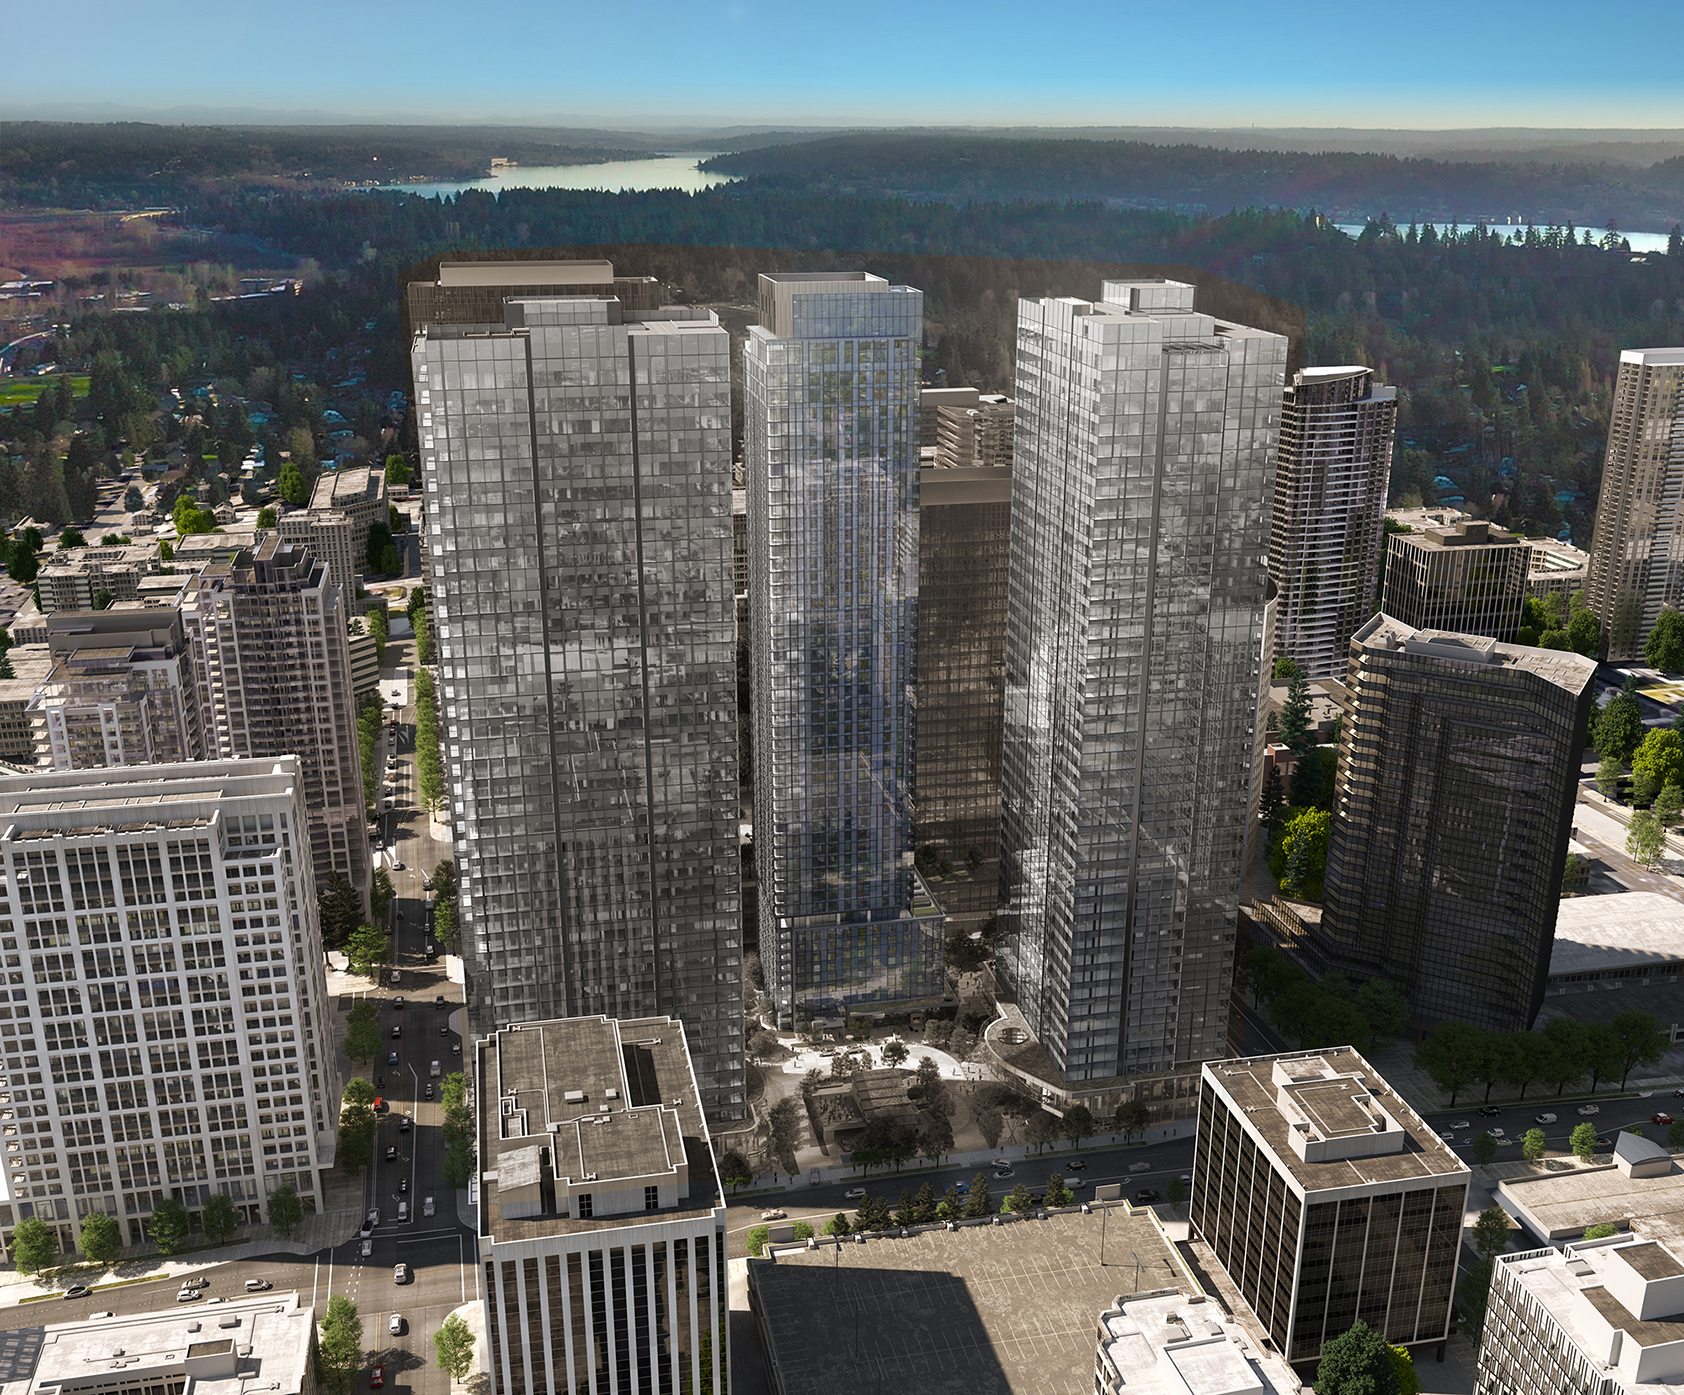 The Bravern: Luxury Condominium Living Comes to Bellevue, WA on Seattle's  Eastside